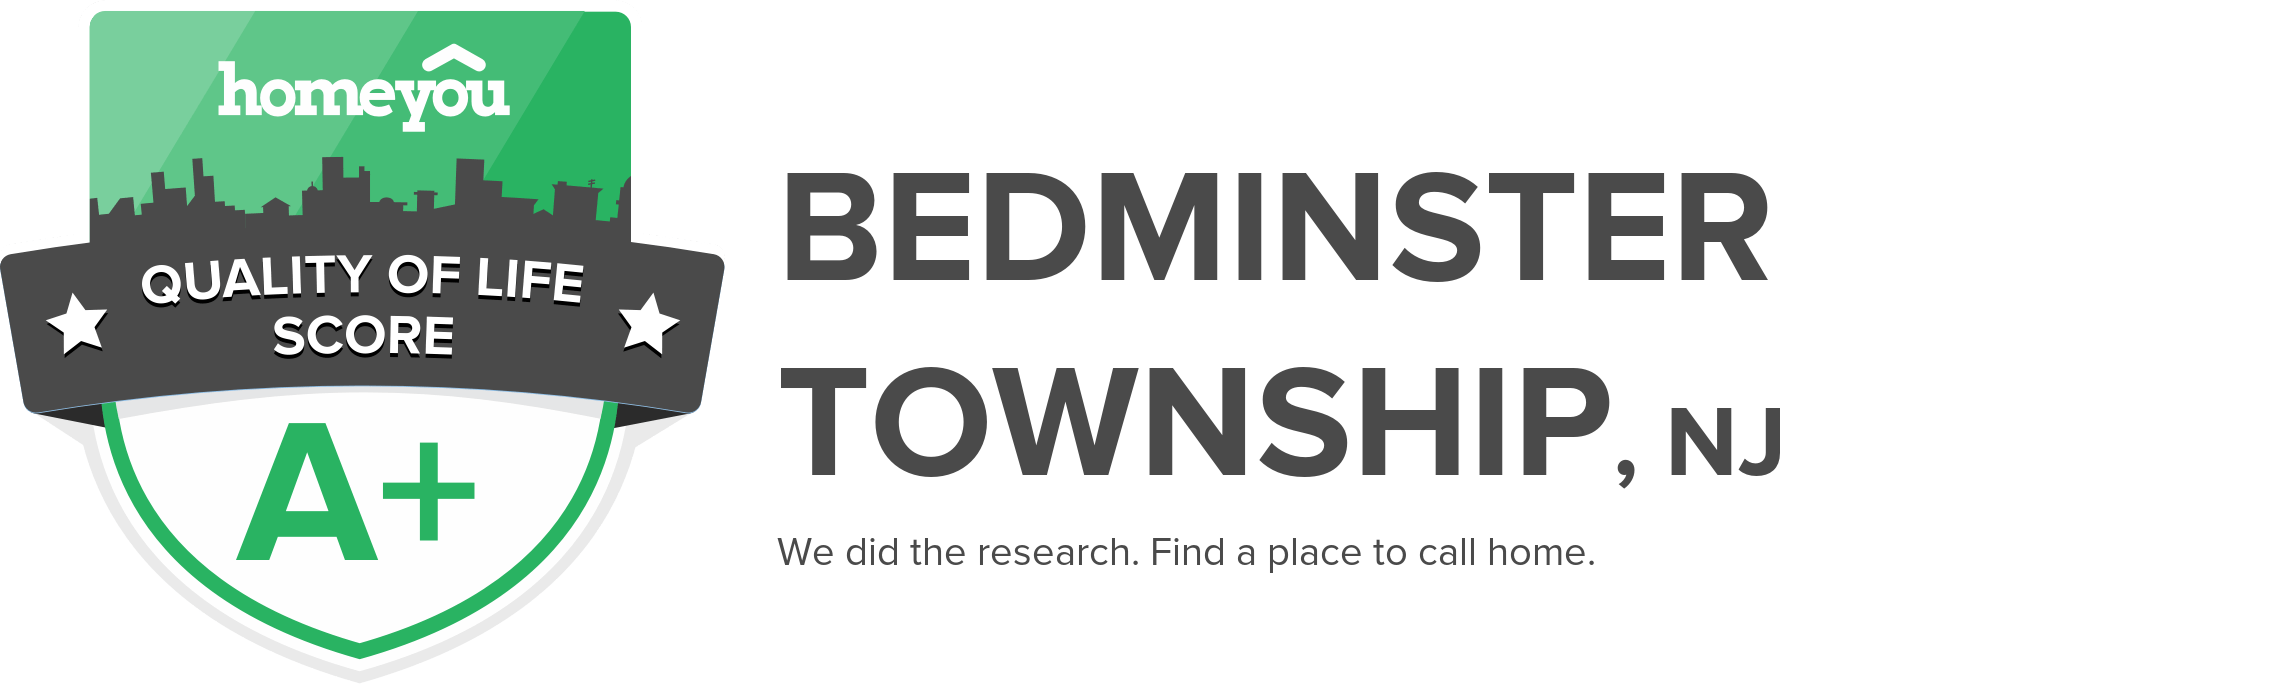 Bedminster Township, NJ